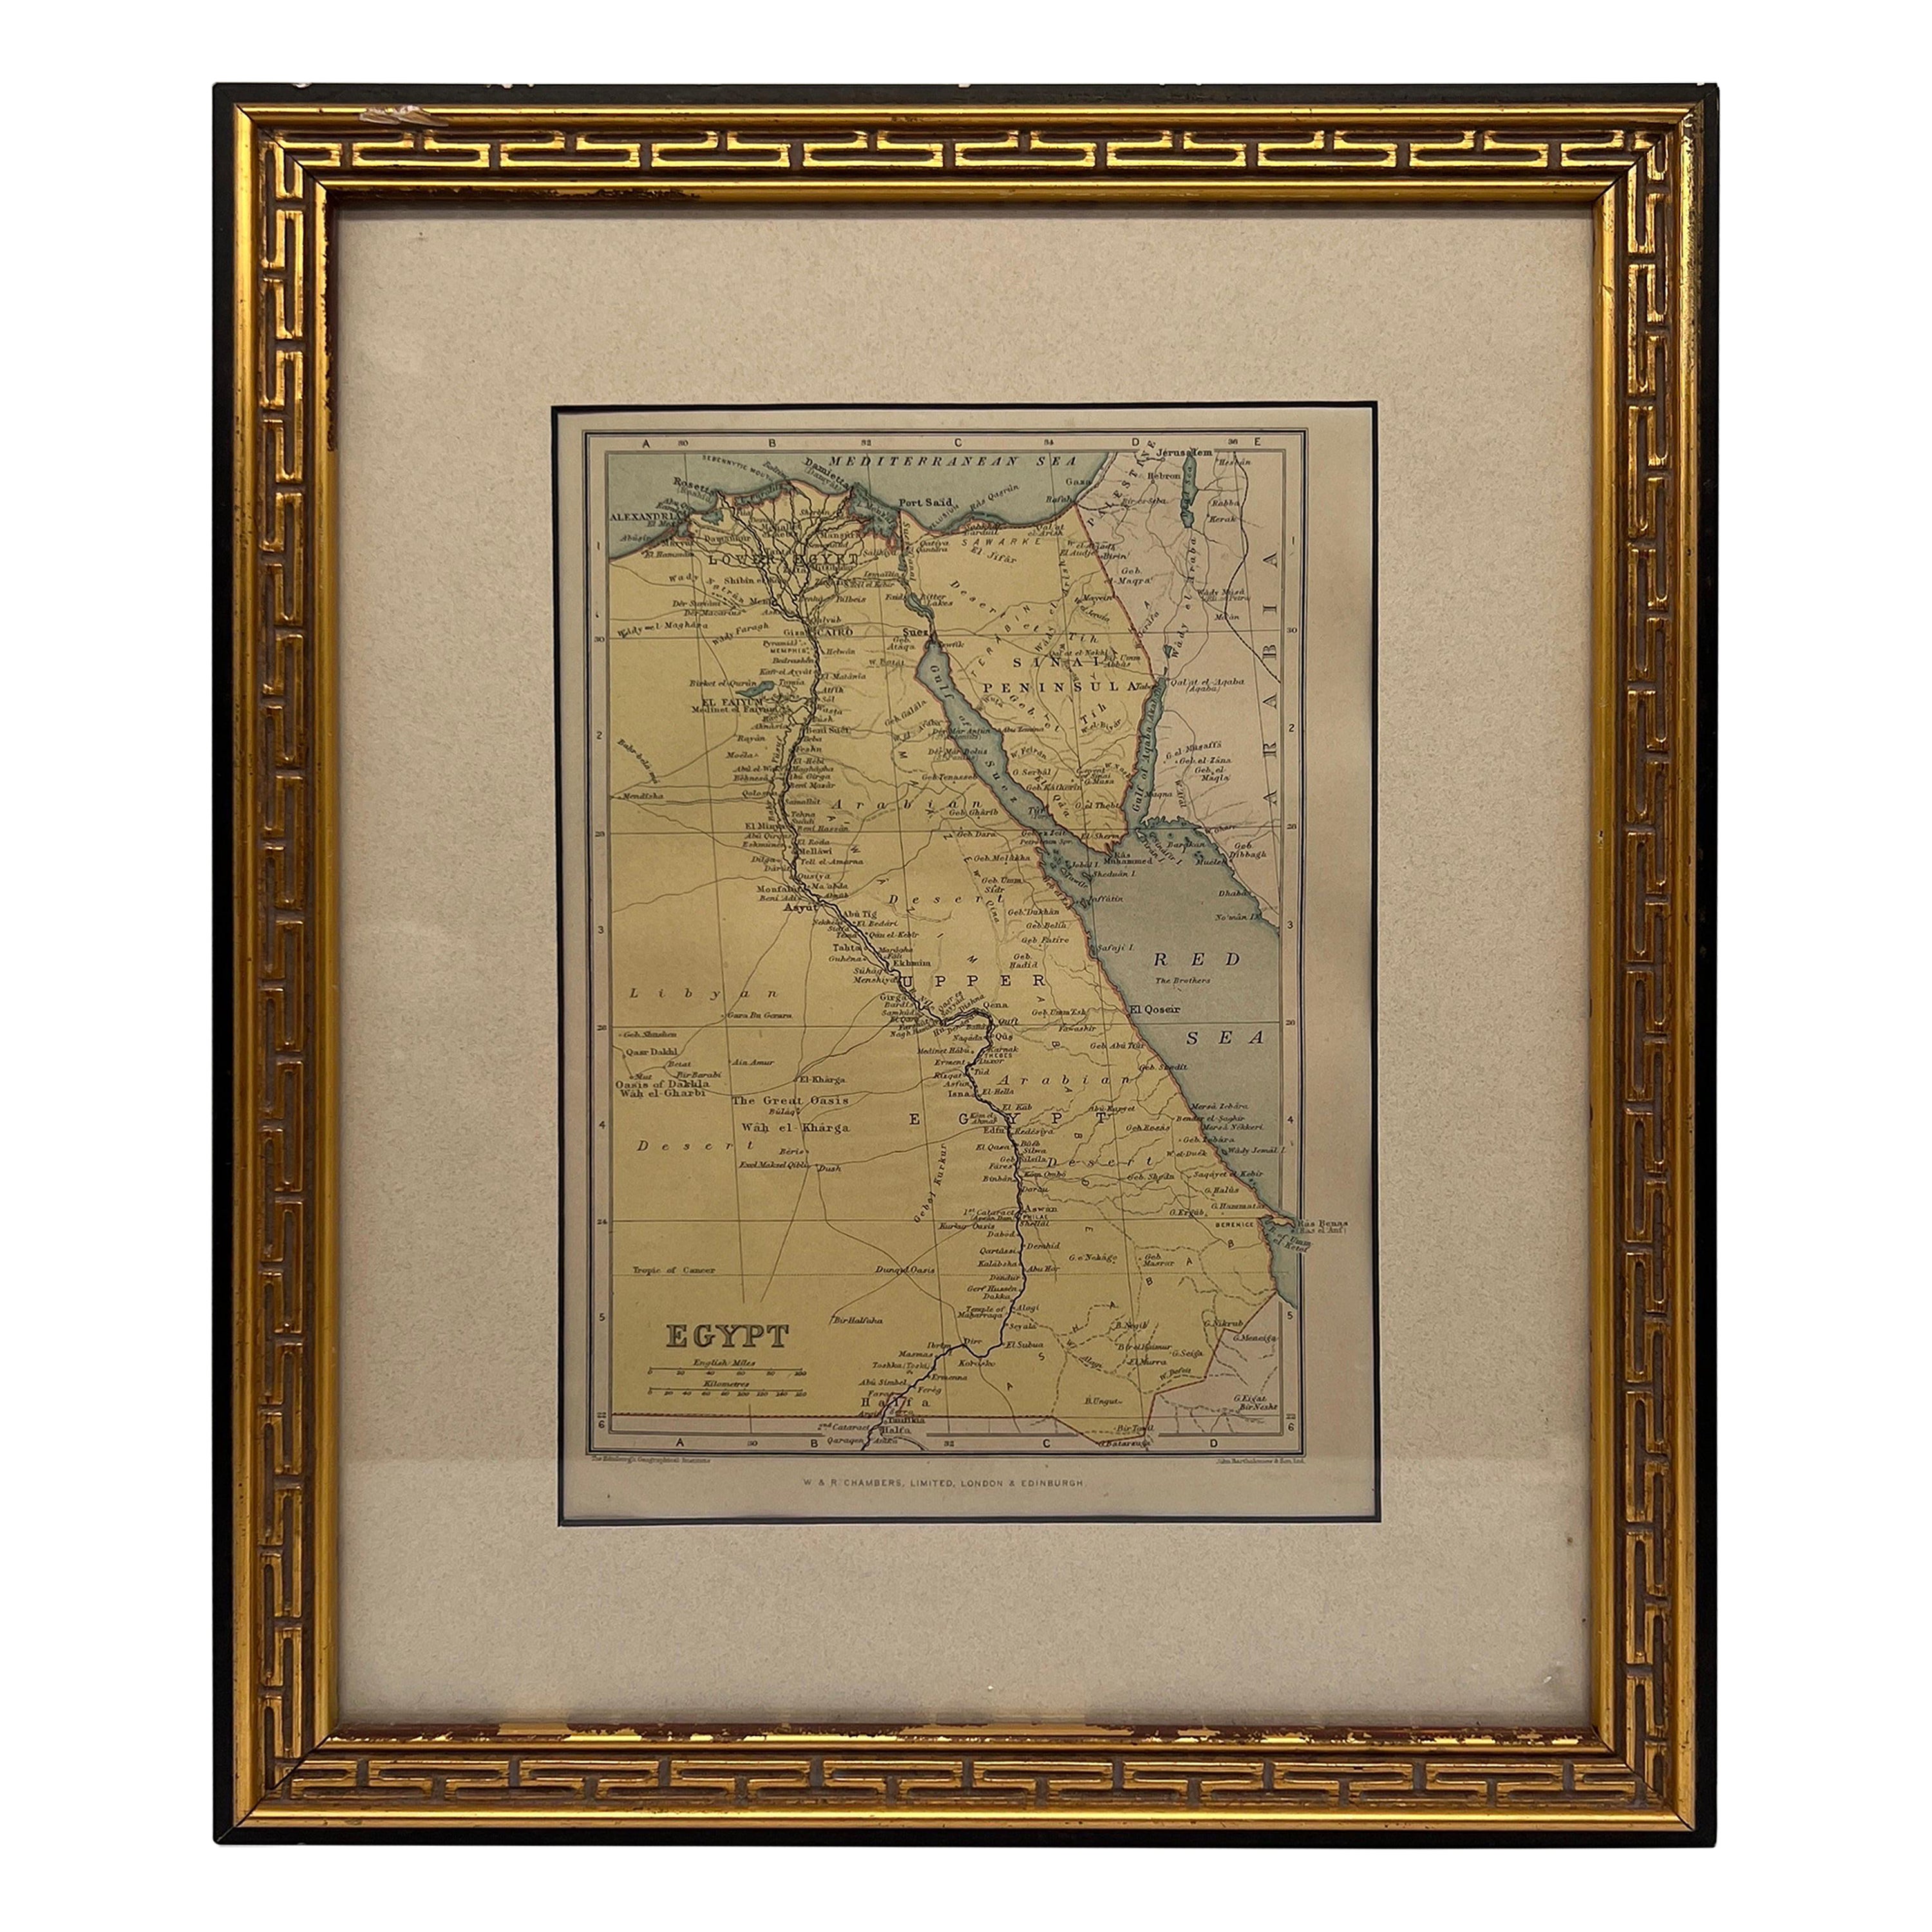 Antique Map of Egypt, John Bartholomew & Sons Ltd C. 1880